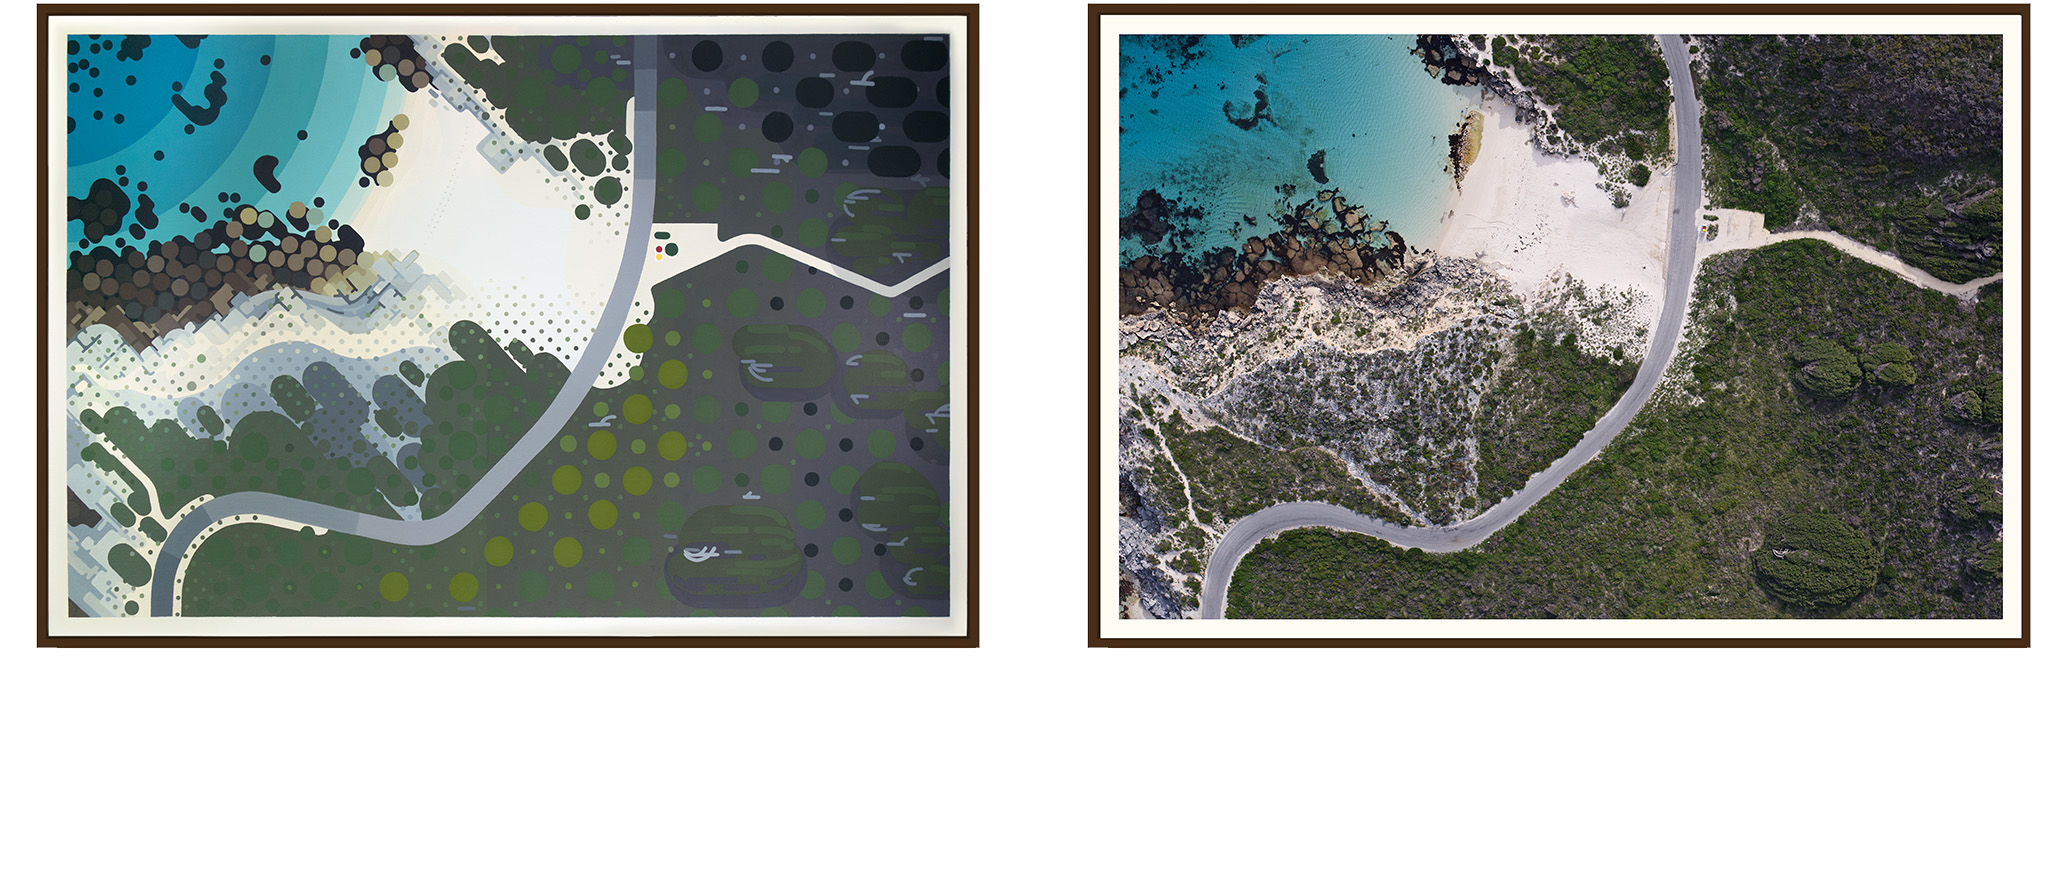  Left: 'Salmon Bay II' by Amok Island - acrylics on canvas 154cm x 104cm Right: 'Salmon Bay II' by Jarrad Seng - giclee photographic print on canvas 154cm x 104cm 